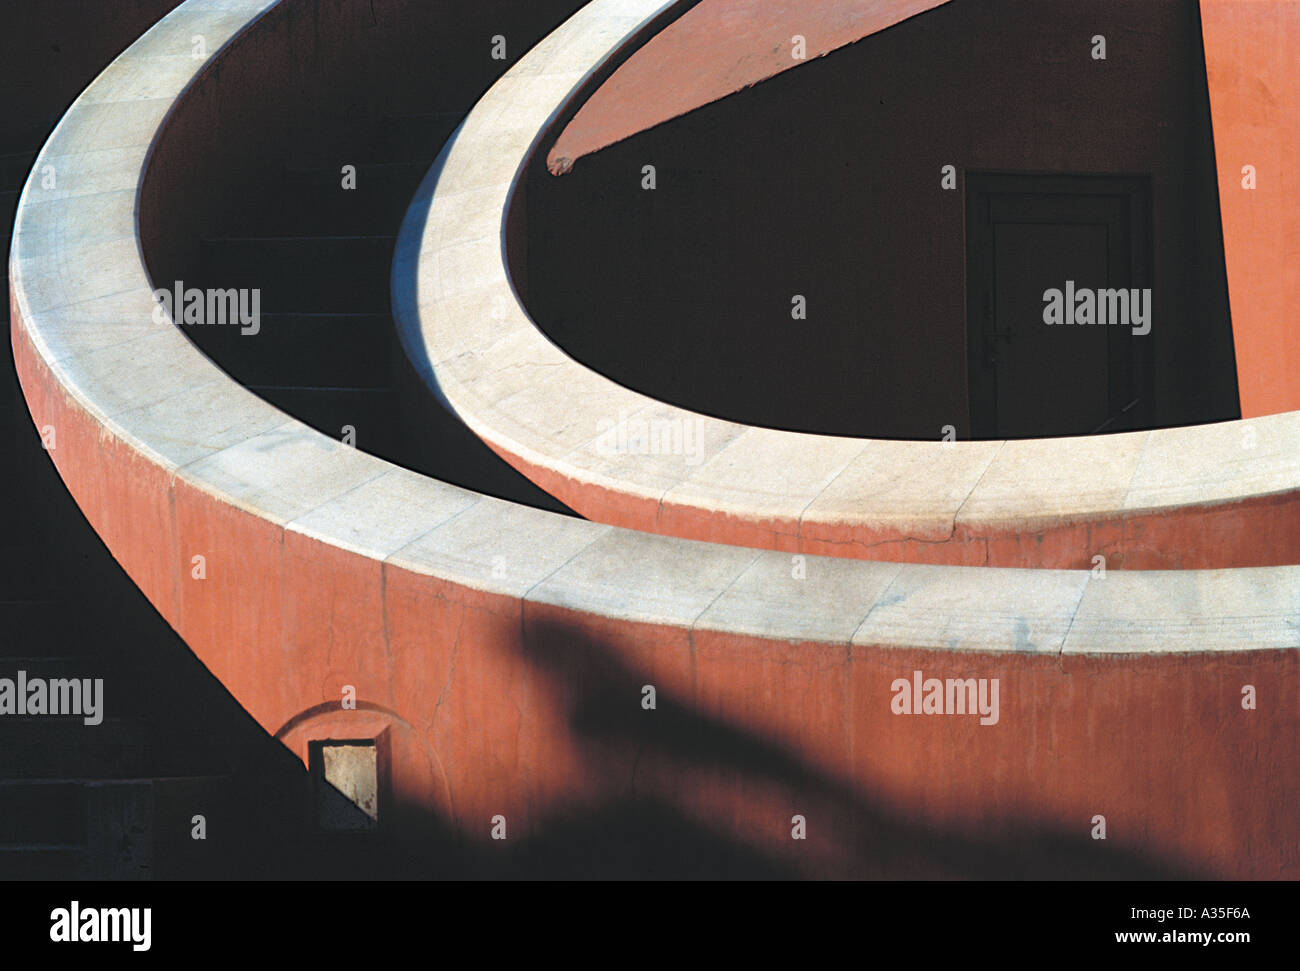 Jantar Mantar, osservatorio astronomico, Delhi, India, architettura indiana Foto Stock